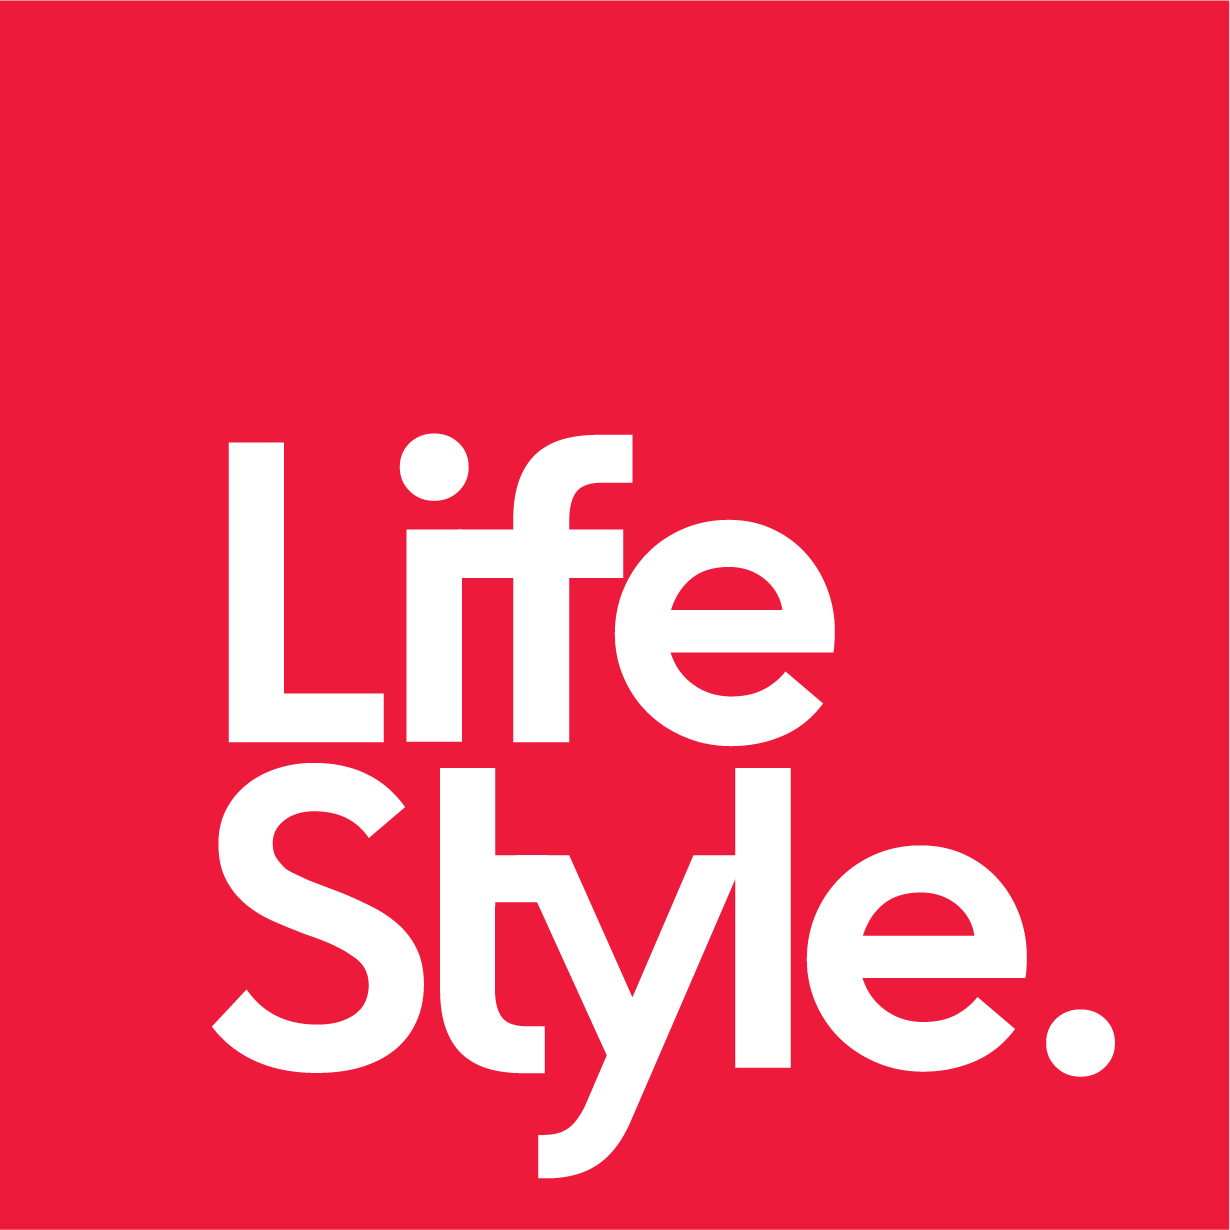 Lifestyle logo